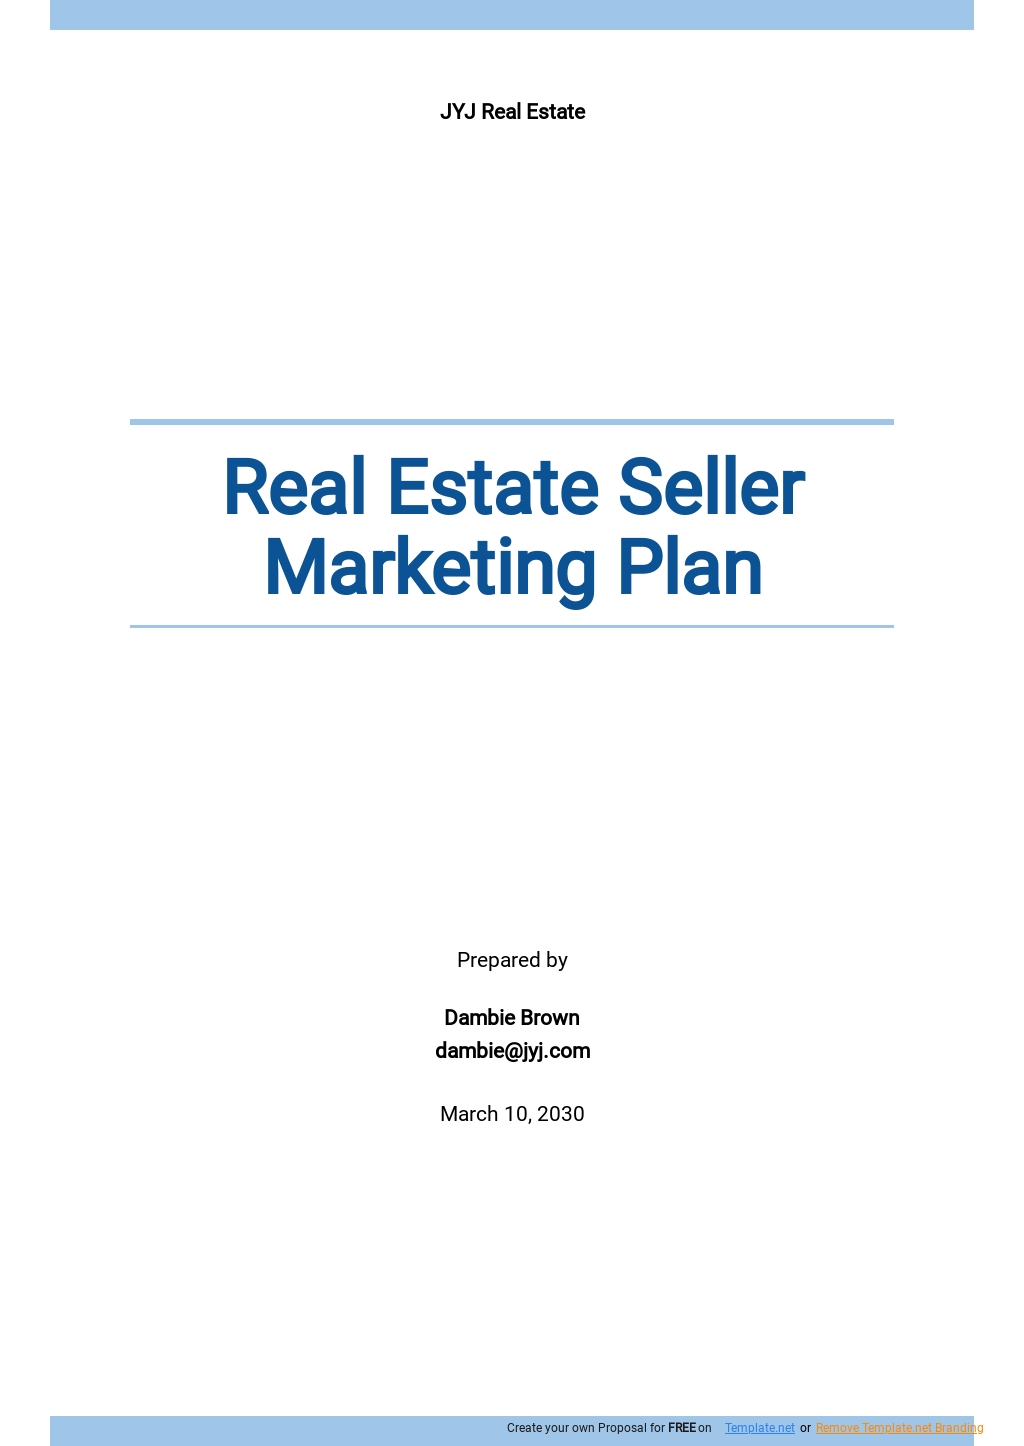 Real Estate Seller Marketing Plan Template.jpe